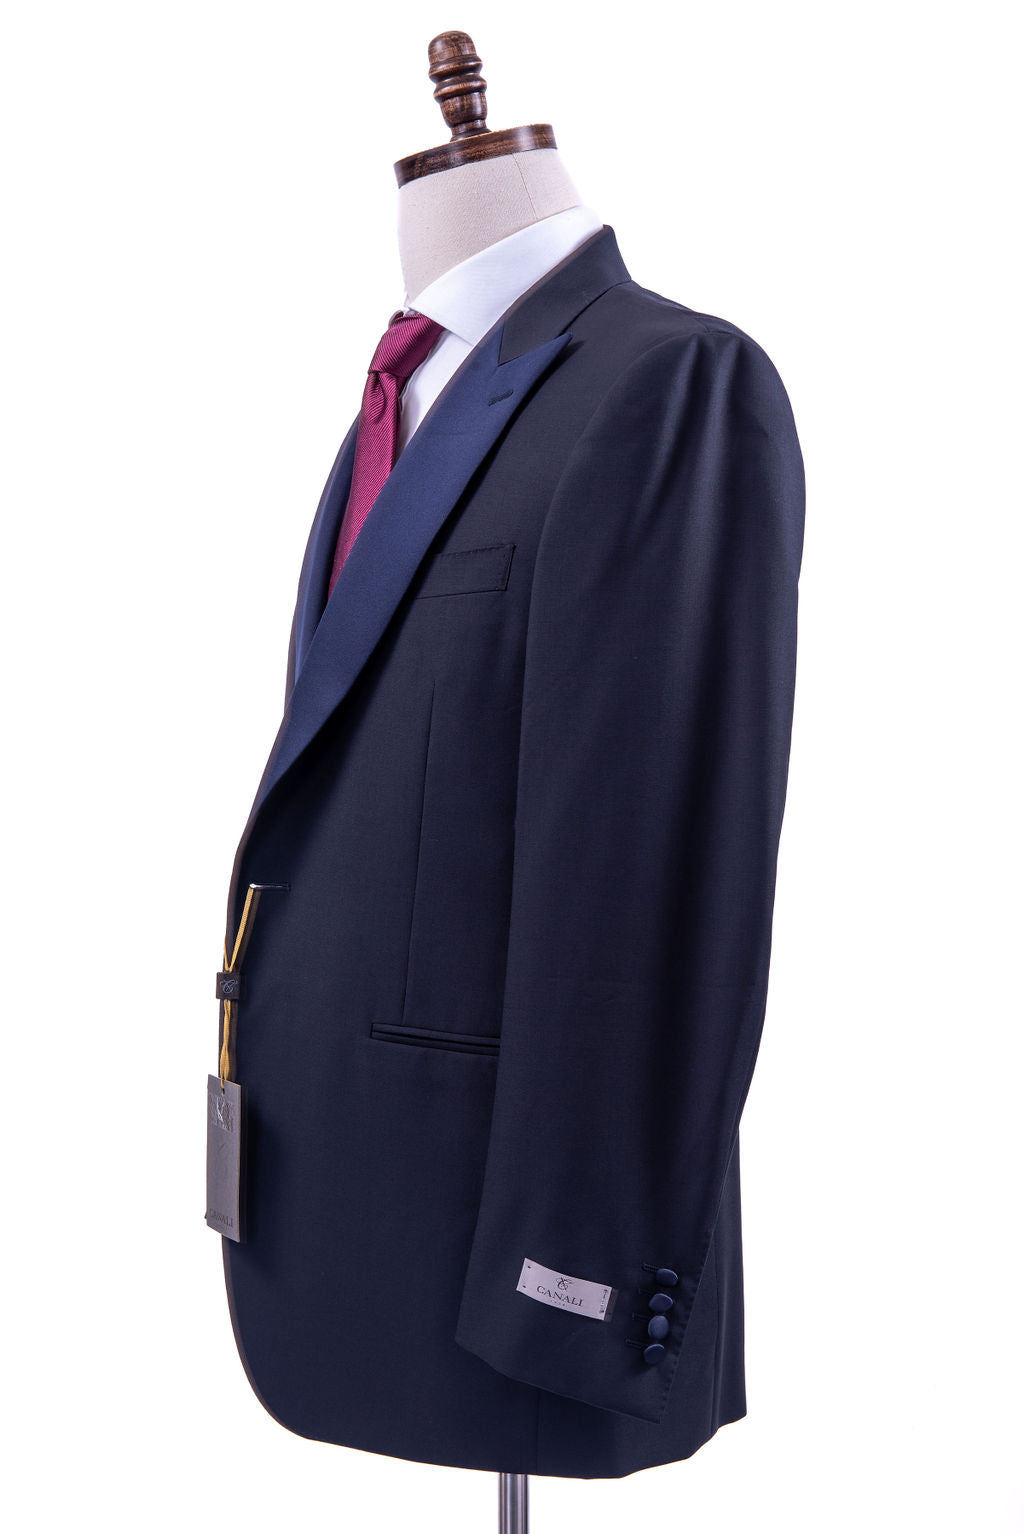 Canali 1934 Mens Navy Blue 42R Drop 7 Wool Tuxedo Suit With Satin Peak Lapels